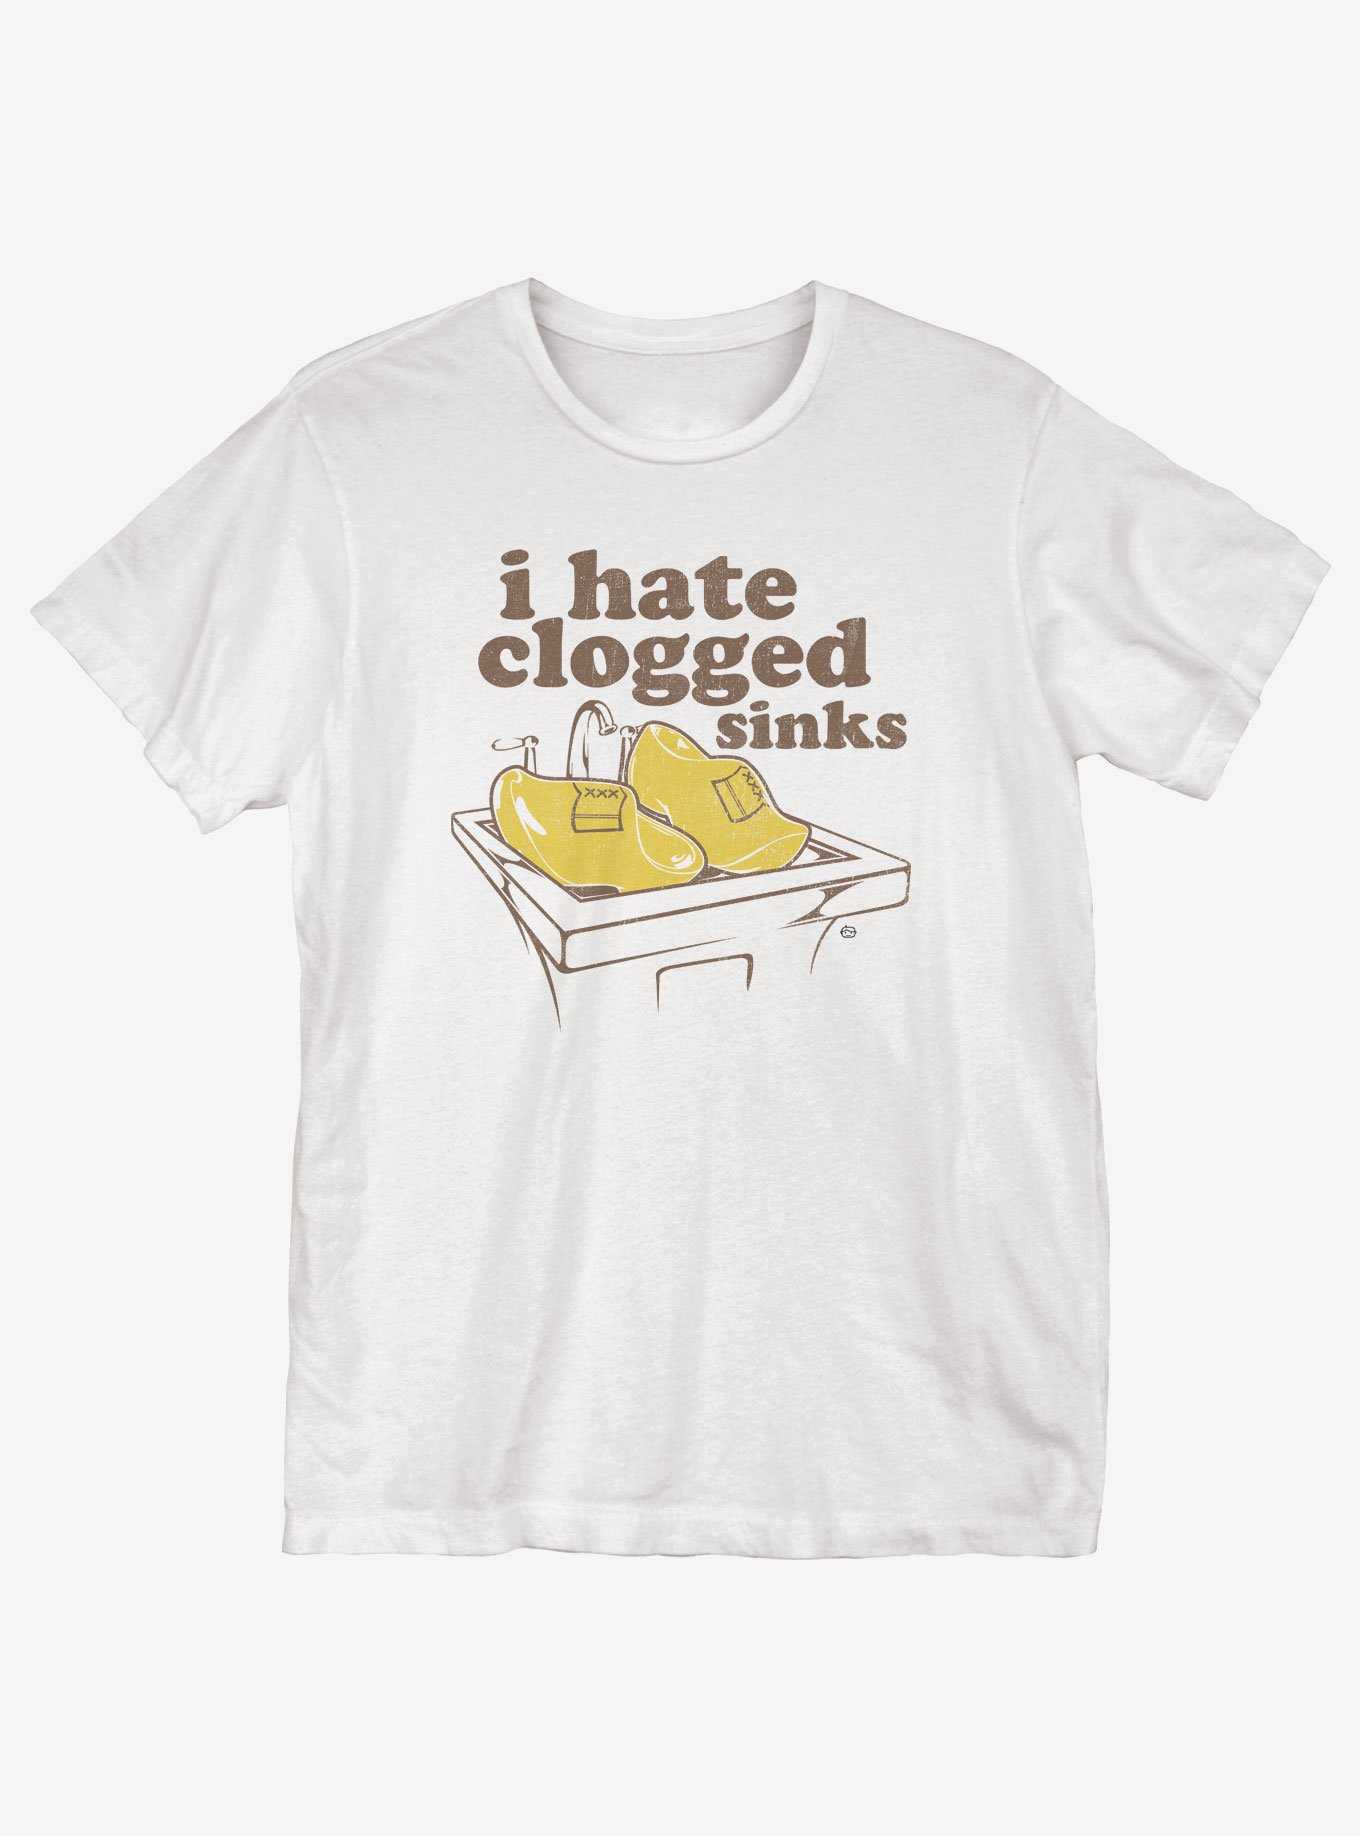 Clogged Sinks T-Shirt, , hi-res